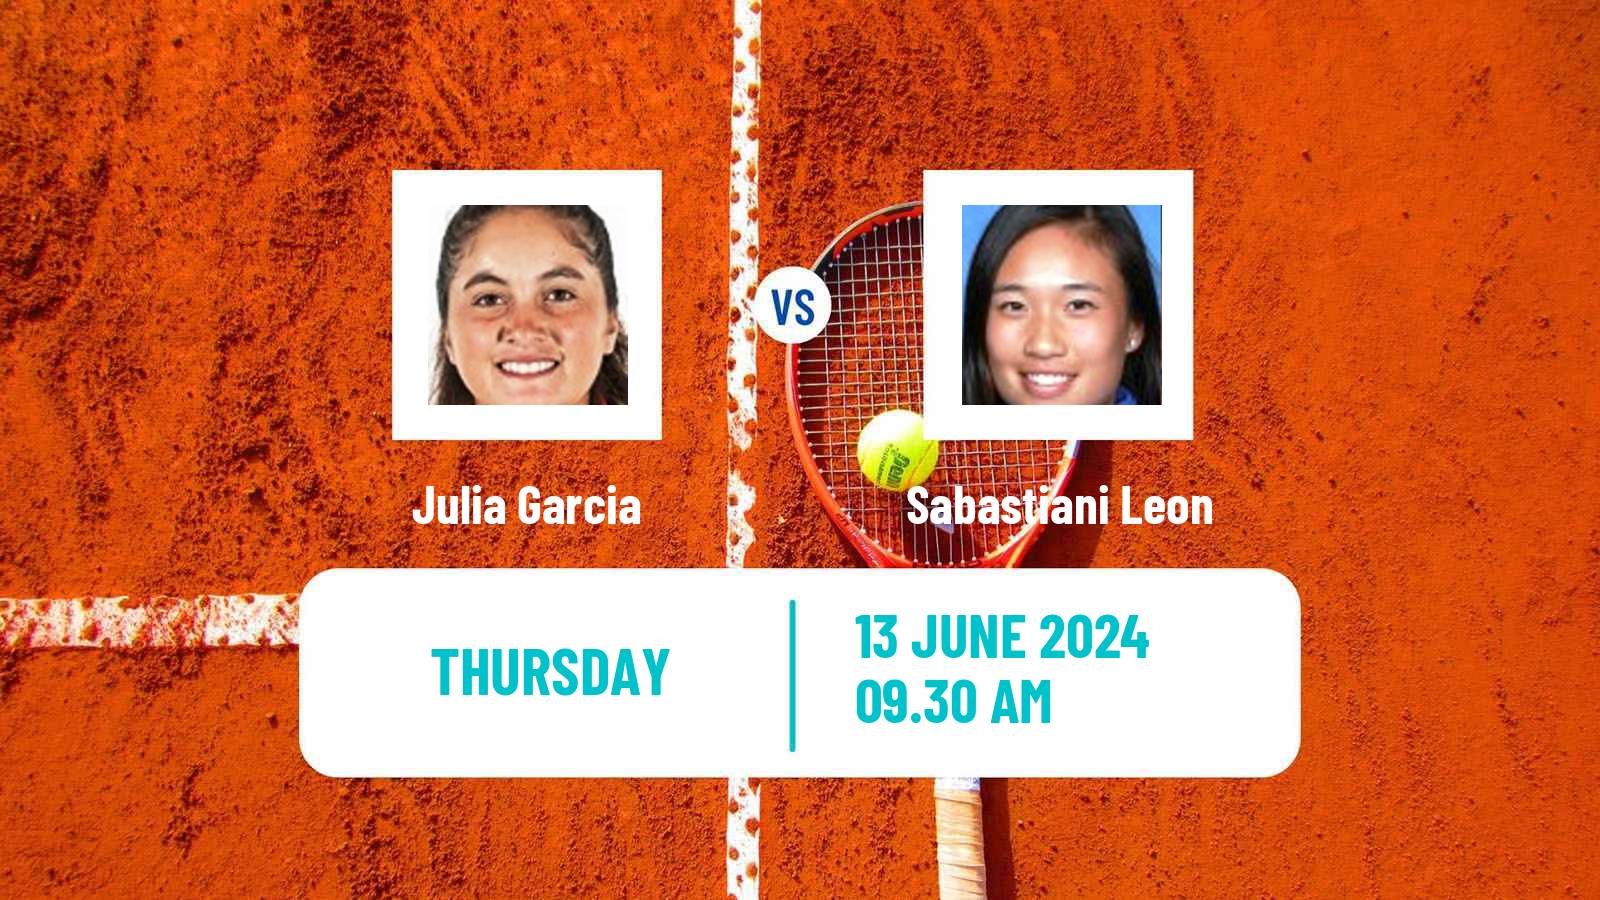 Tennis ITF W15 Santo Domingo 2 Women Julia Garcia - Sabastiani Leon